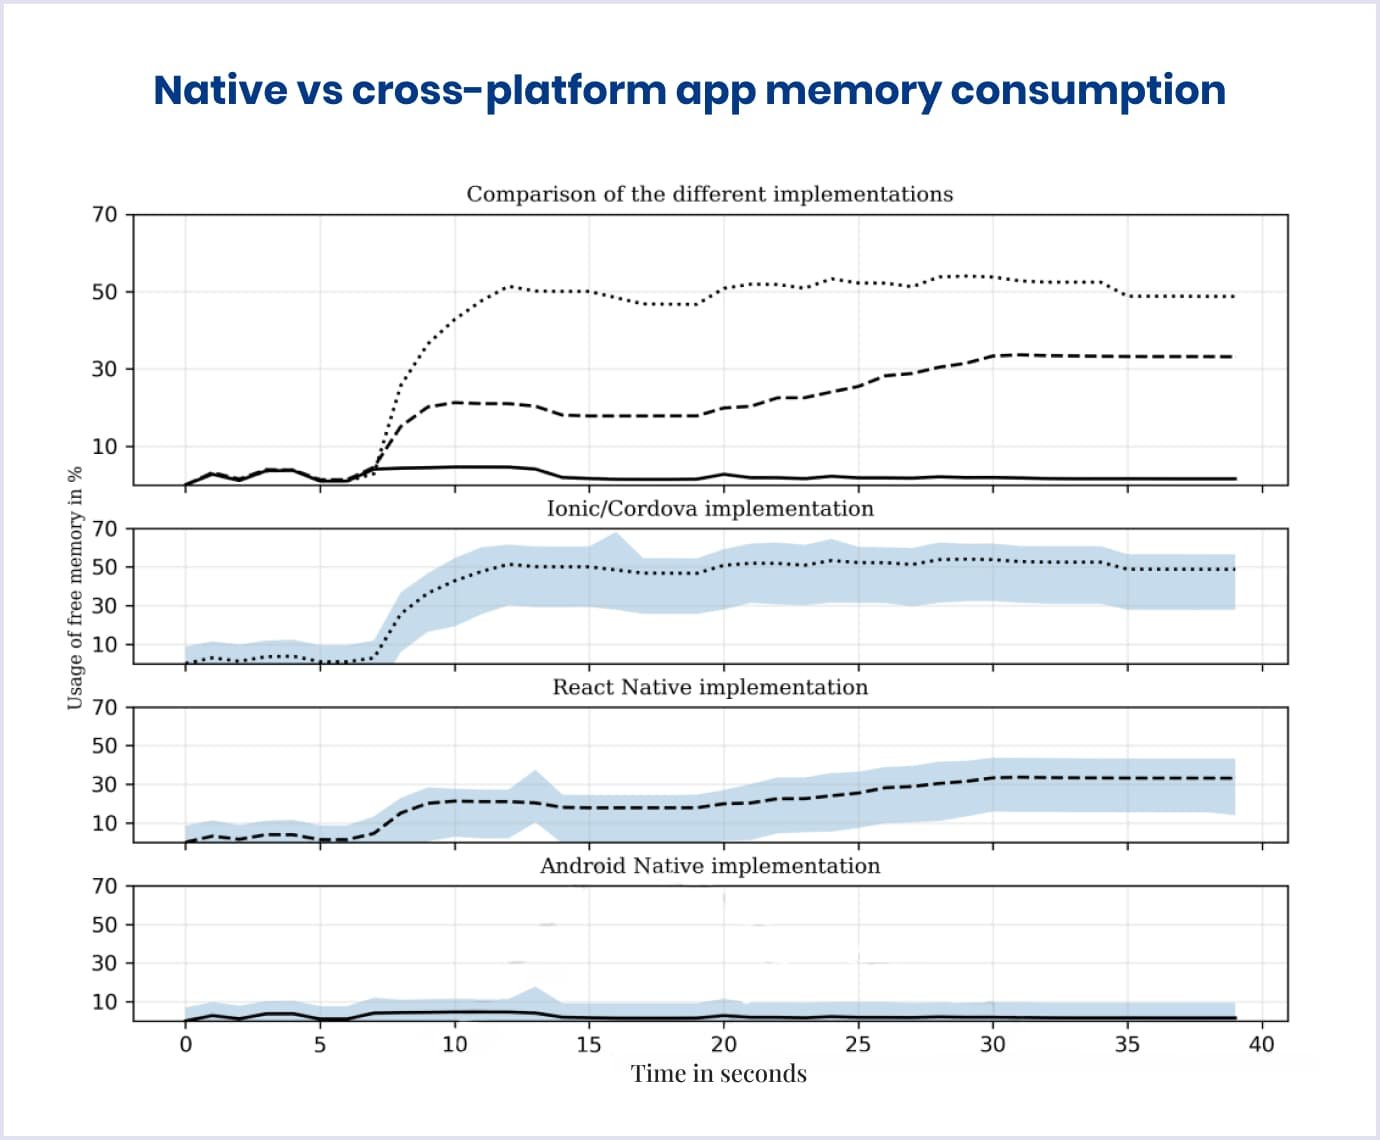 Native vs cross-platform memory consumption